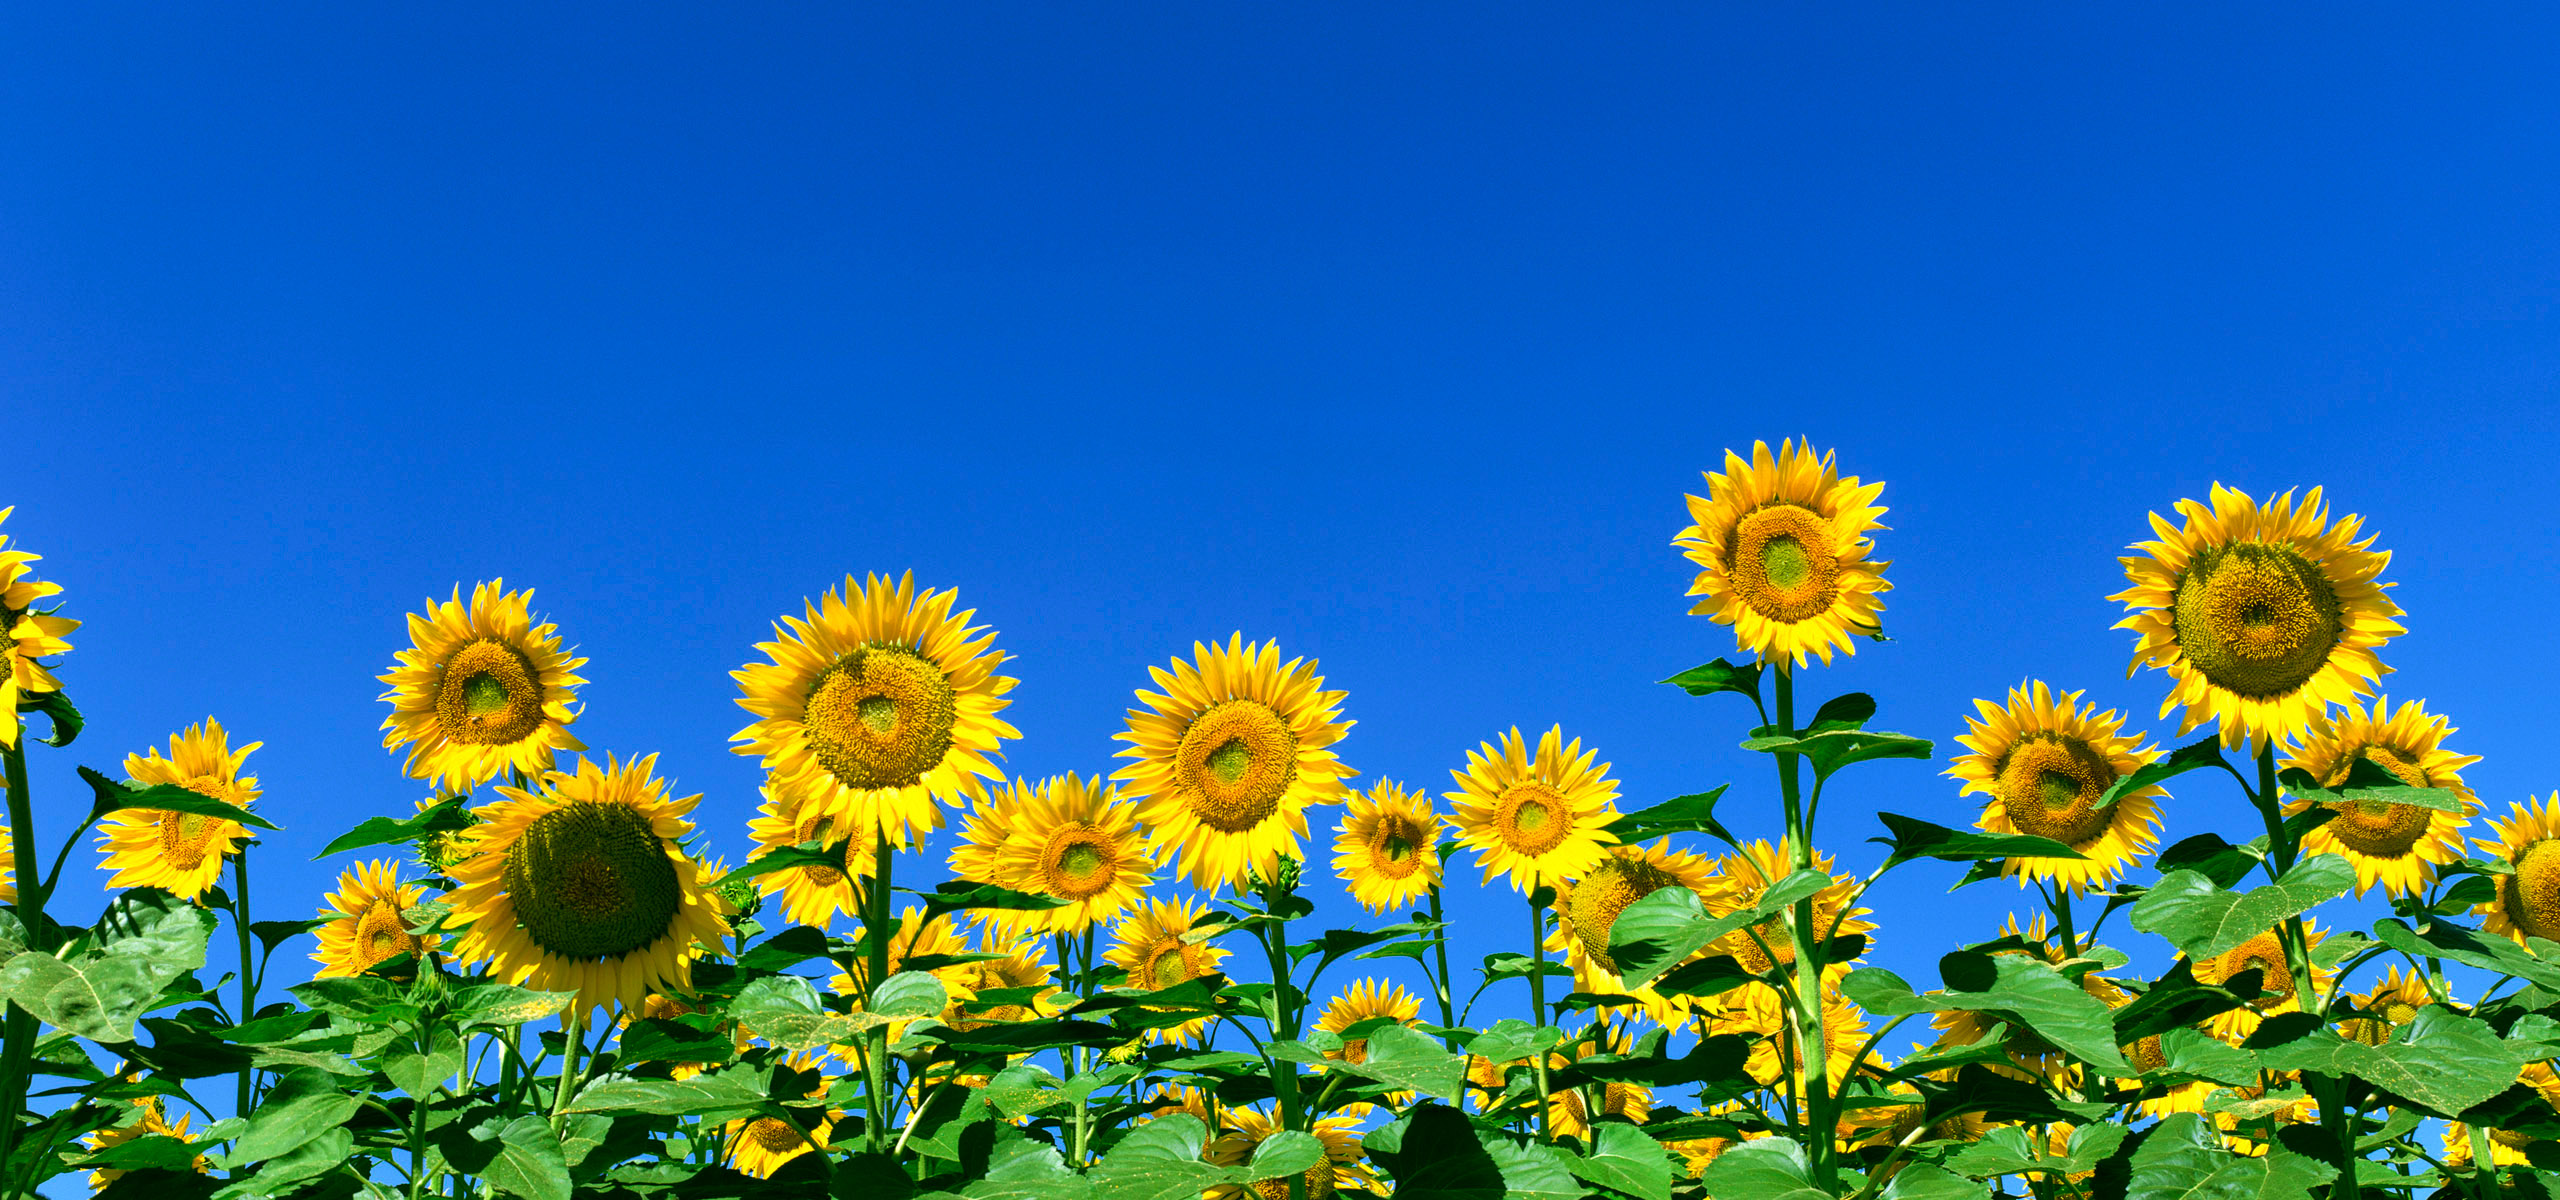 подсолнухи на голубом фоне, цветы, природа, sunflowers on a blue background, flowers, nature